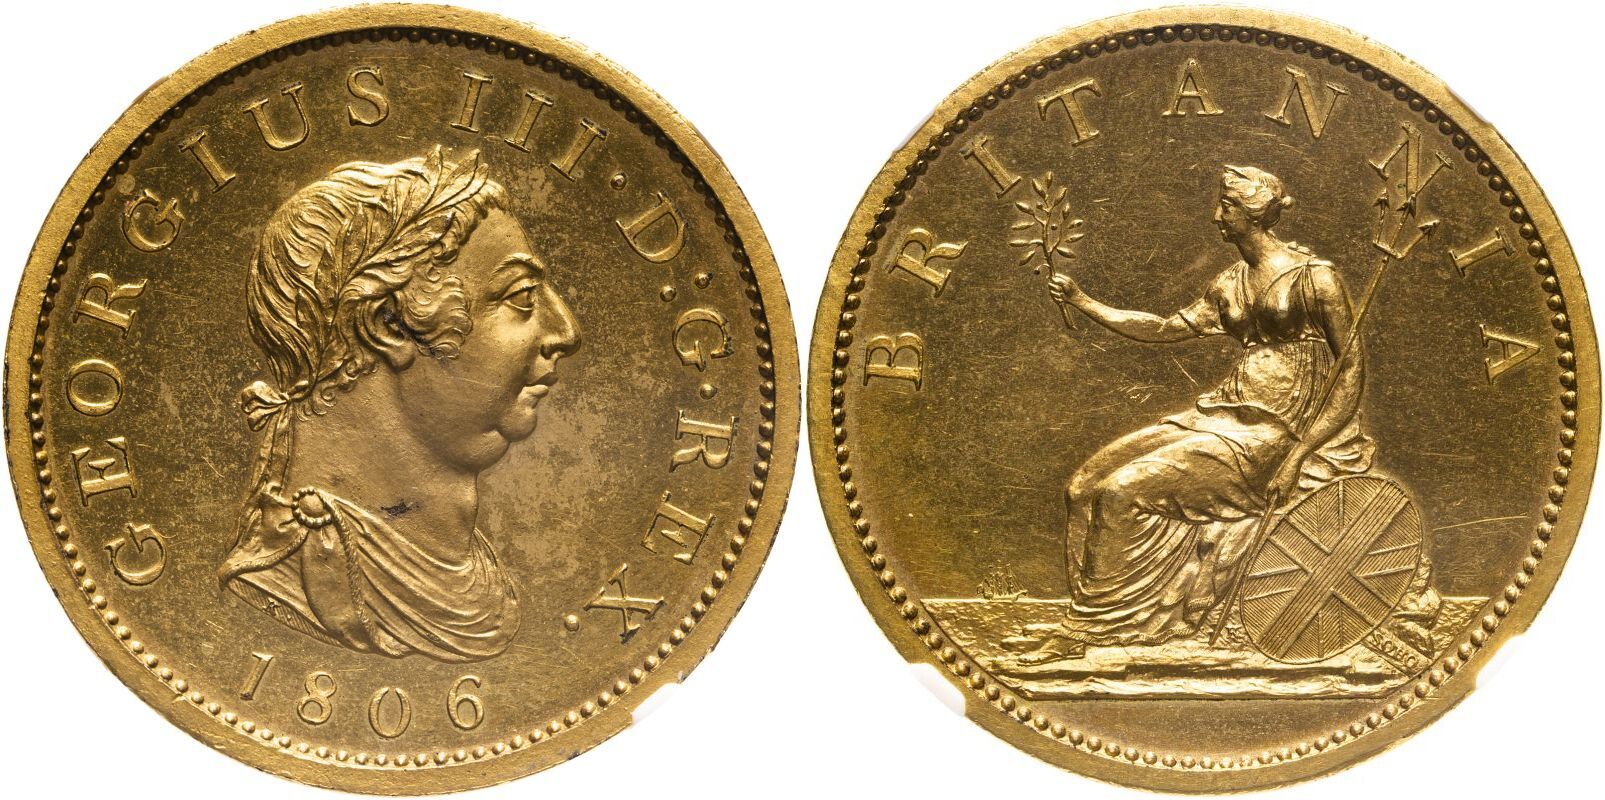 Lot 202 | United Kingdom George III 1806 Copper Penny Gilt proof NGC PF 63 CAMEO #6670777-001